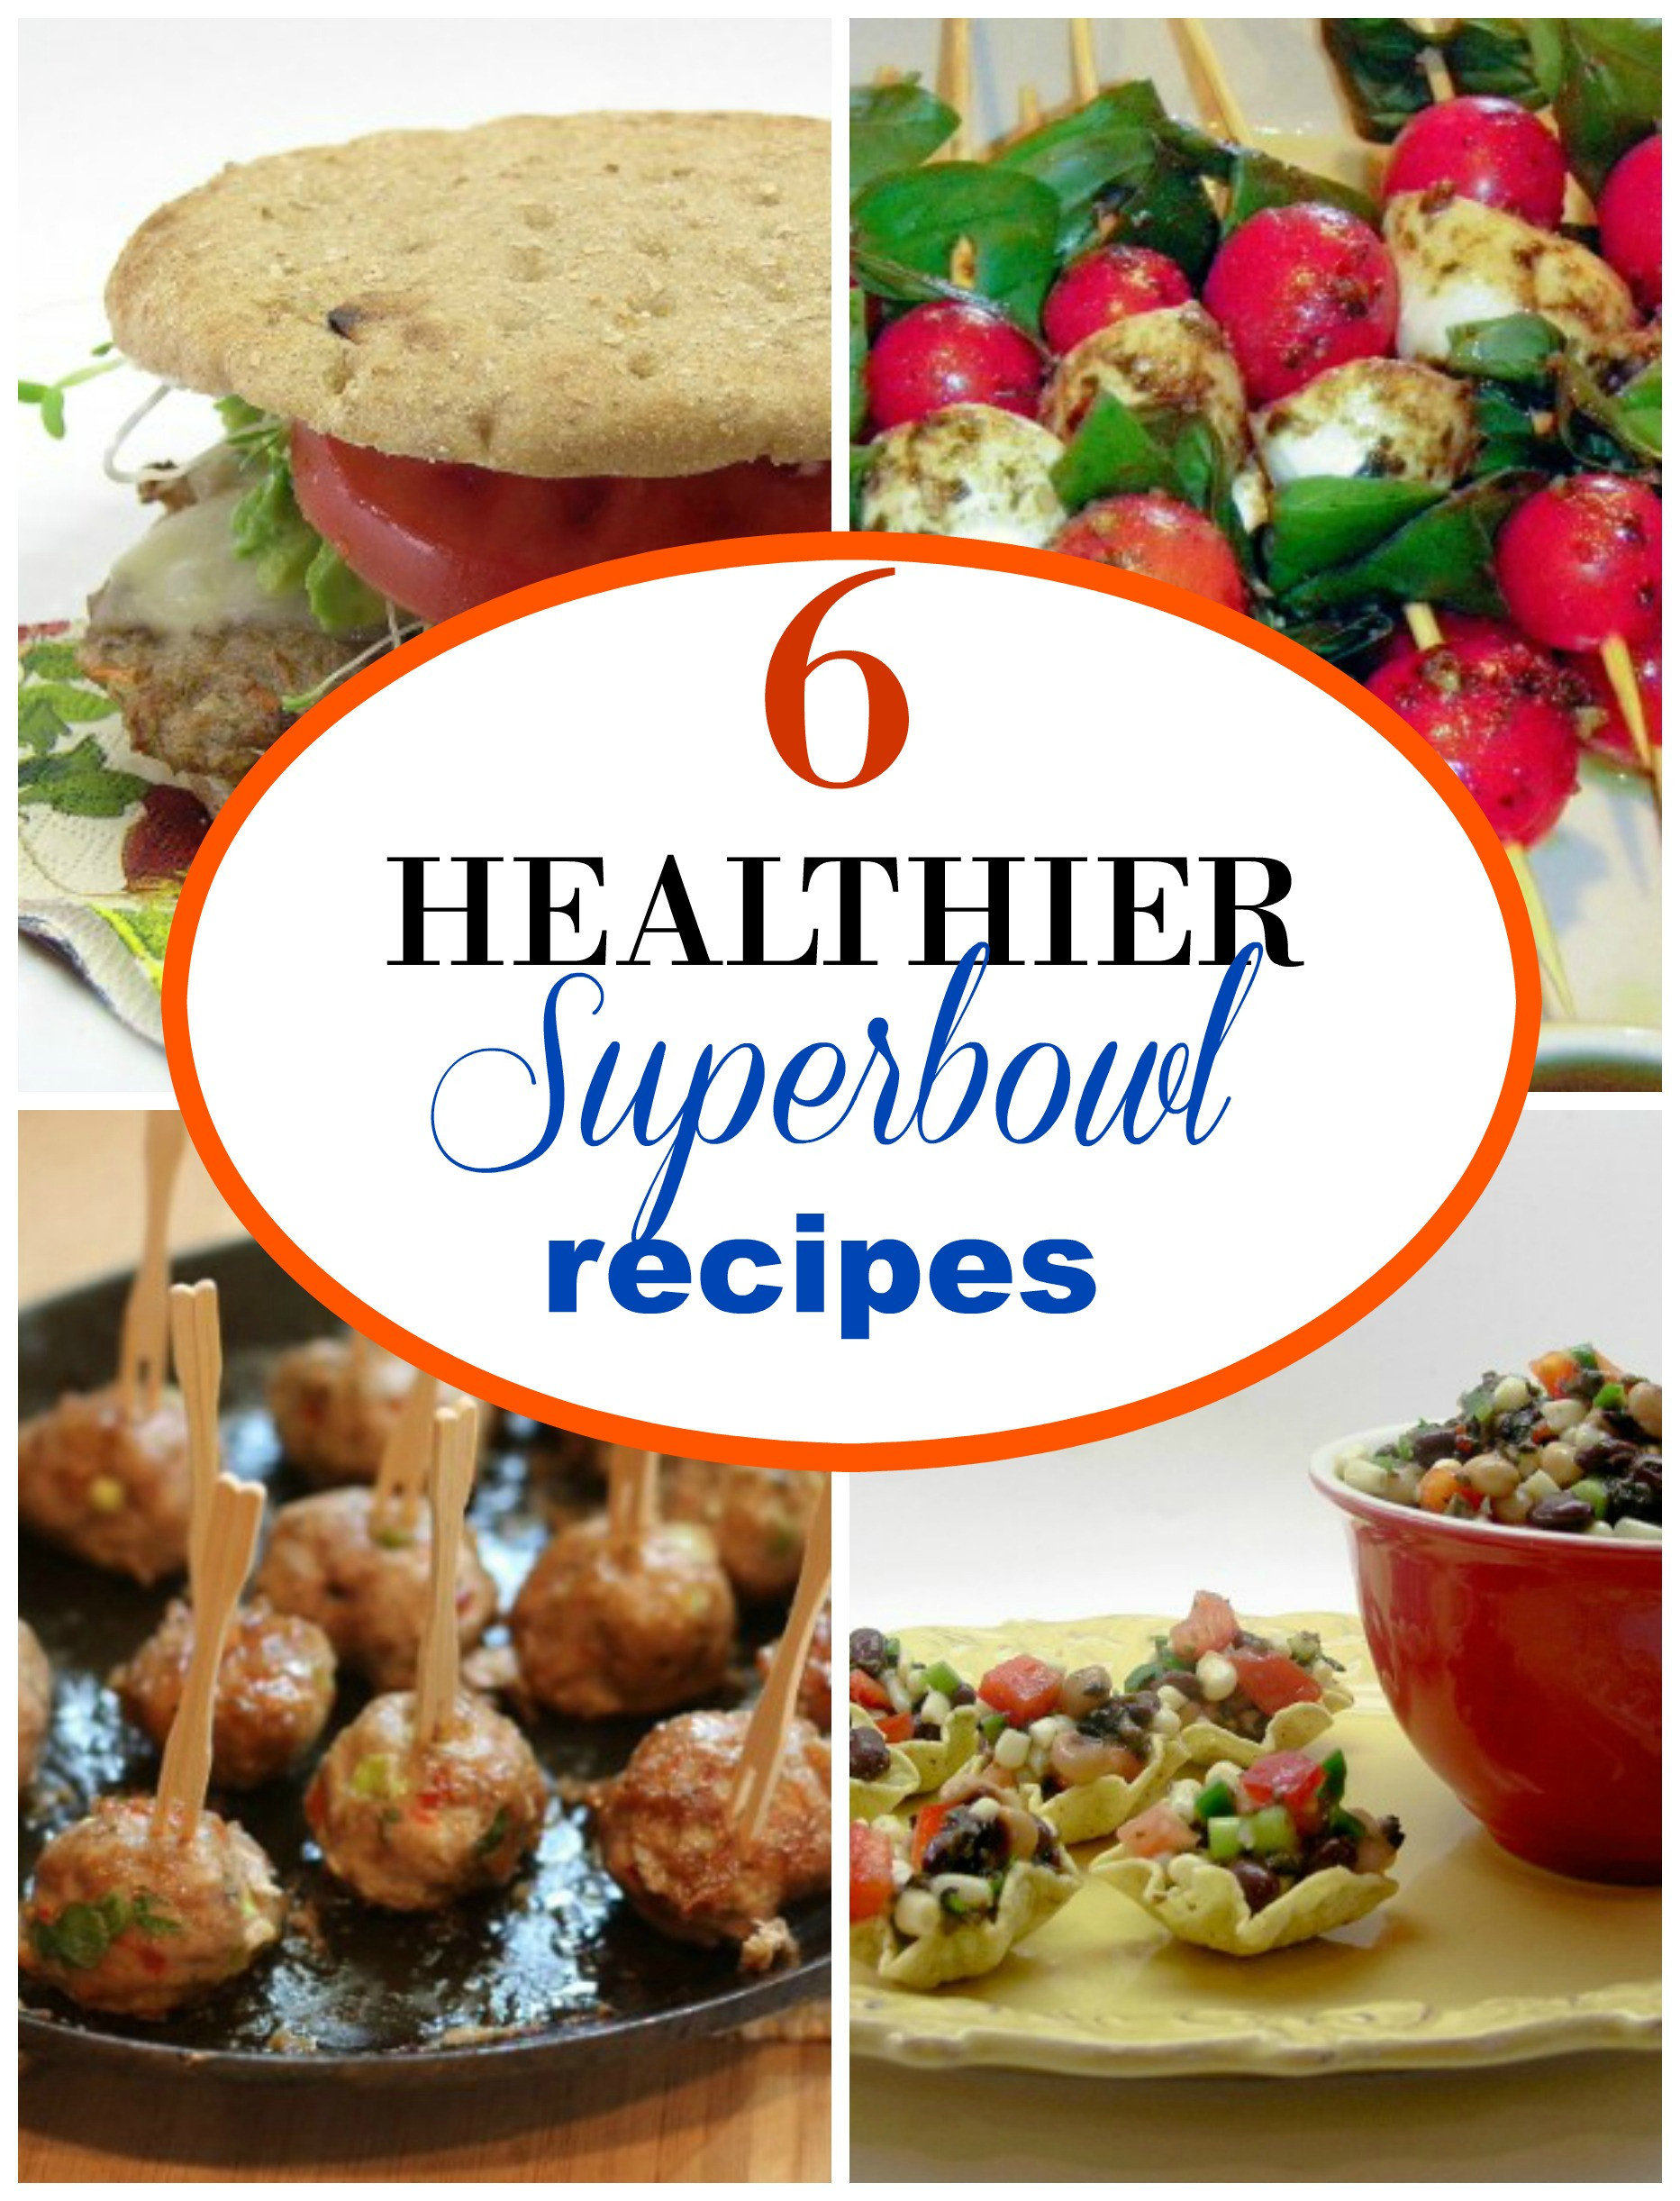 Healthy Super Bowl Recipes
 Healthy Superbowl Recipe Ideas